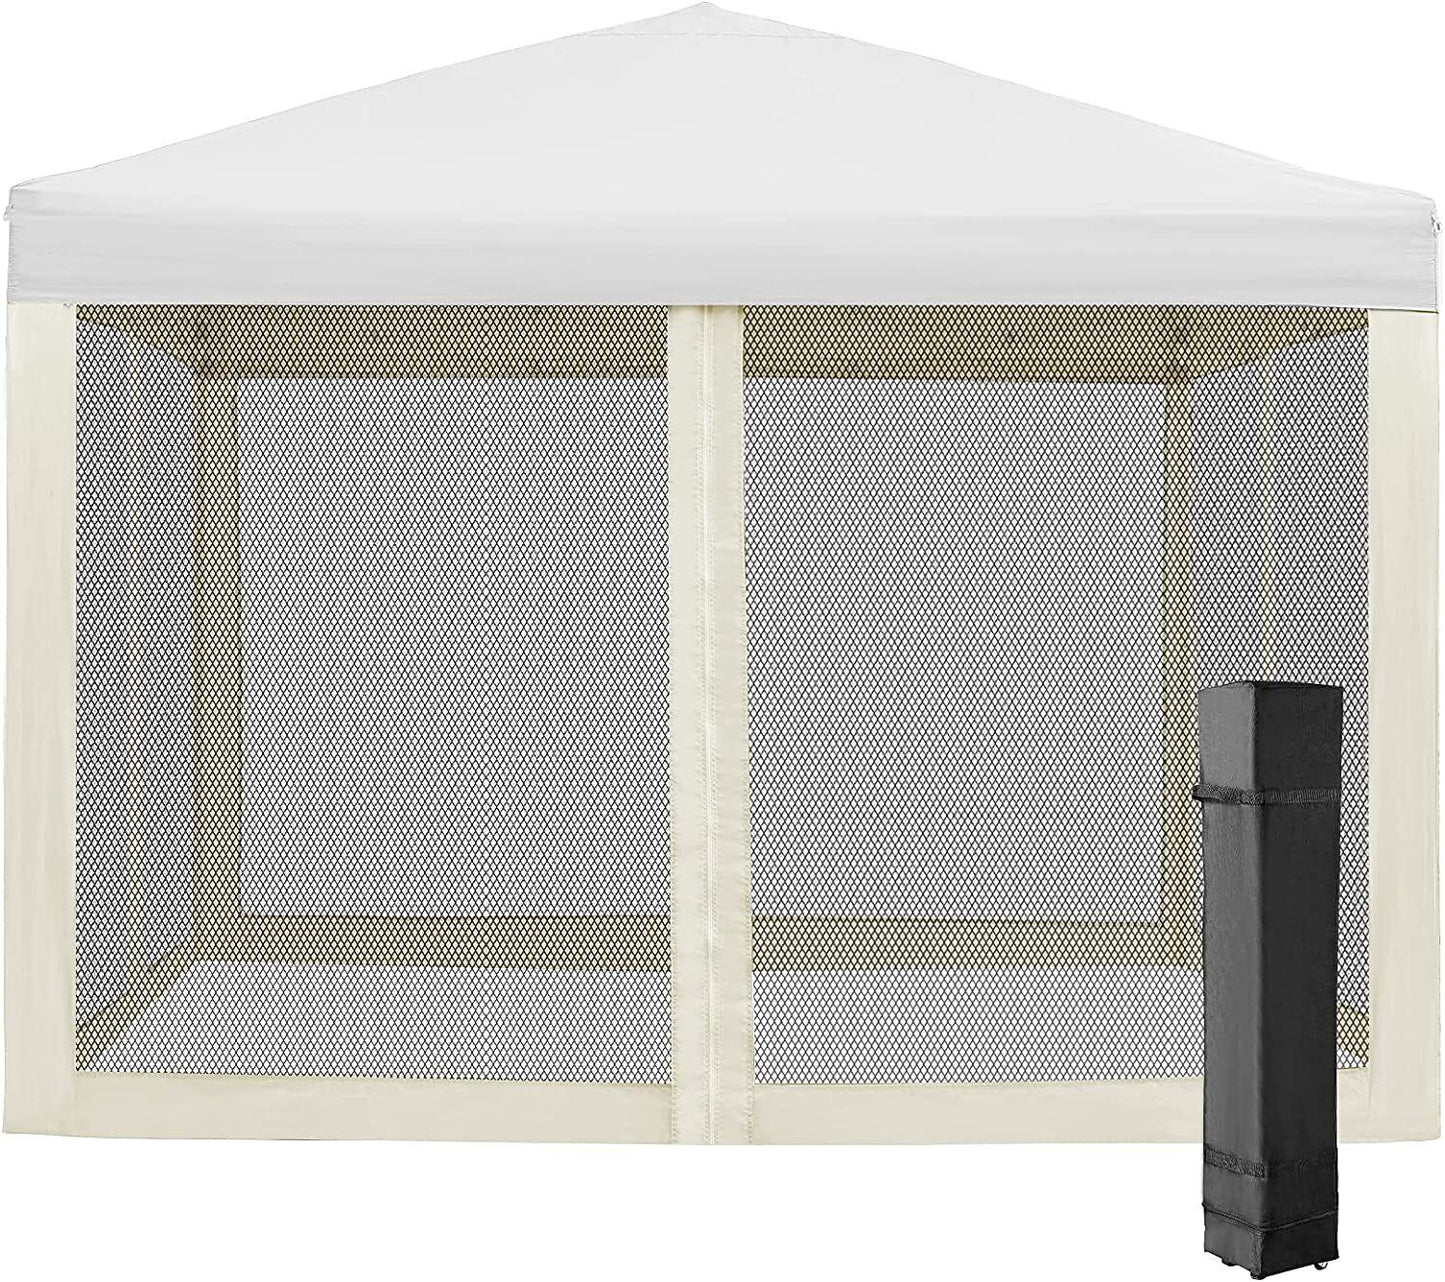 Arlopu 10' x 10' Pop up Canopy Tent with Mosquito Netting Screen Outdoor Folding Gazebo Camping Shelter